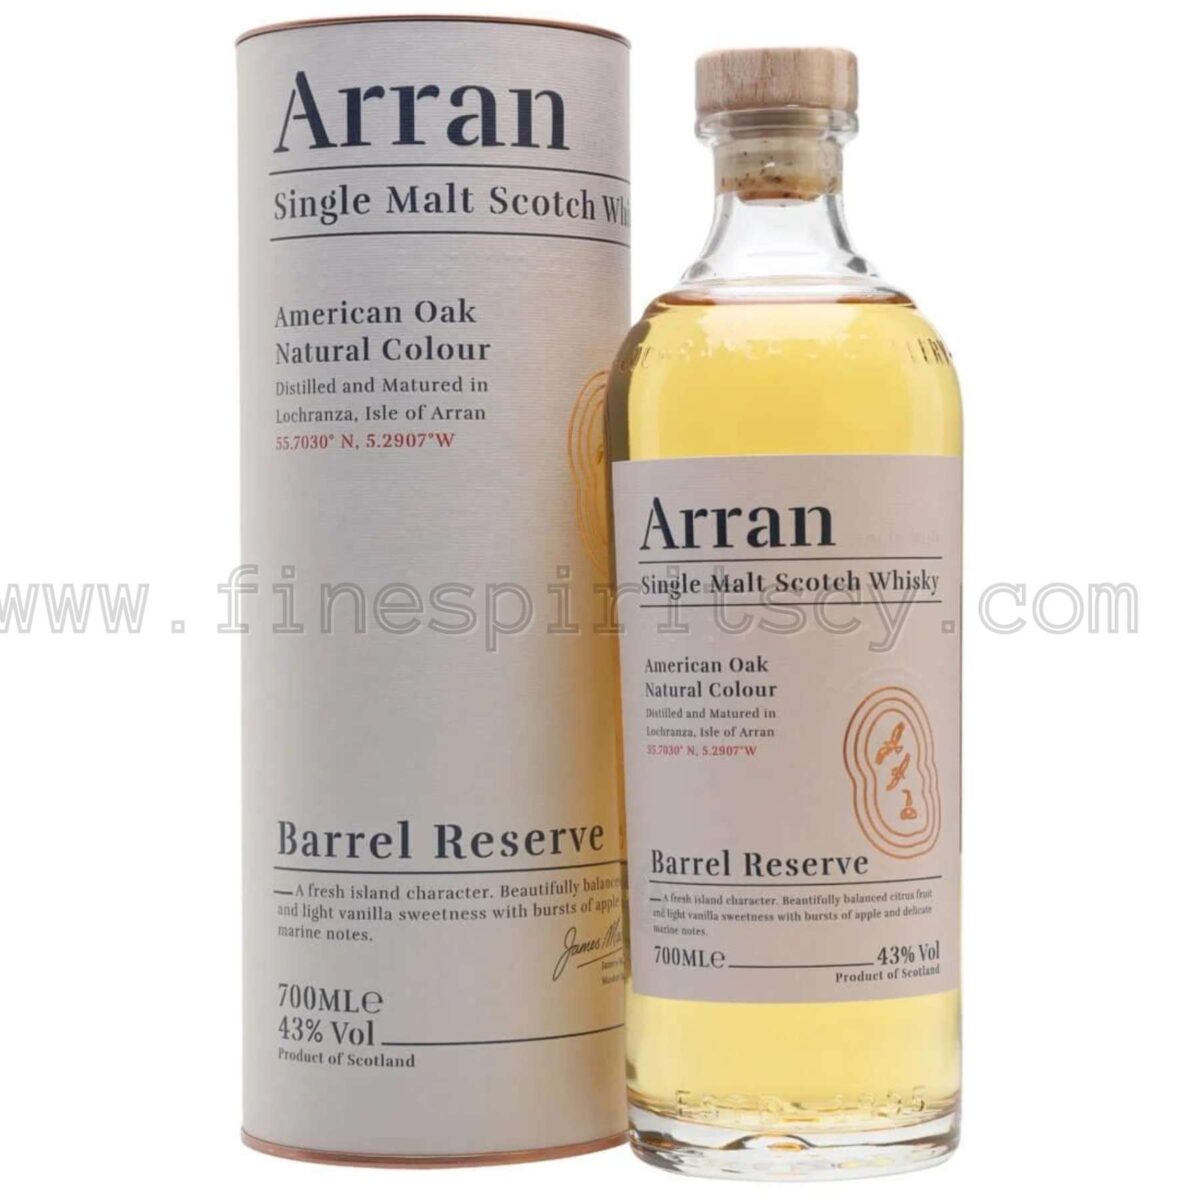 Arran Barrel Reserve Price Cyprus Isle Whisky Online Whiskey Shop Bourbon Buy